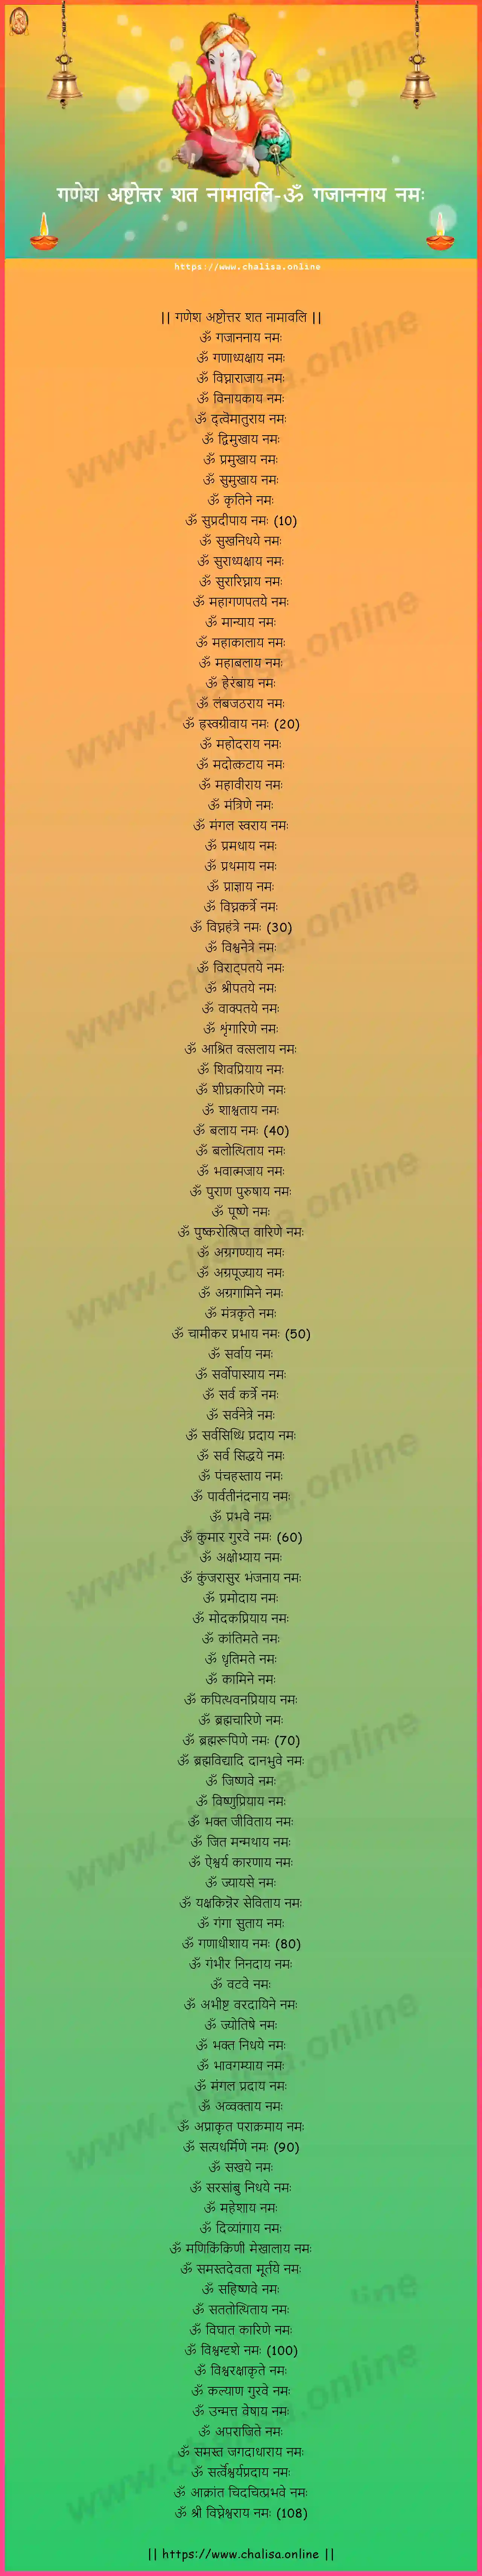 om-gajananaya-ganesha-ashtottara-sata-namavali-marathi-marathi-lyrics-download